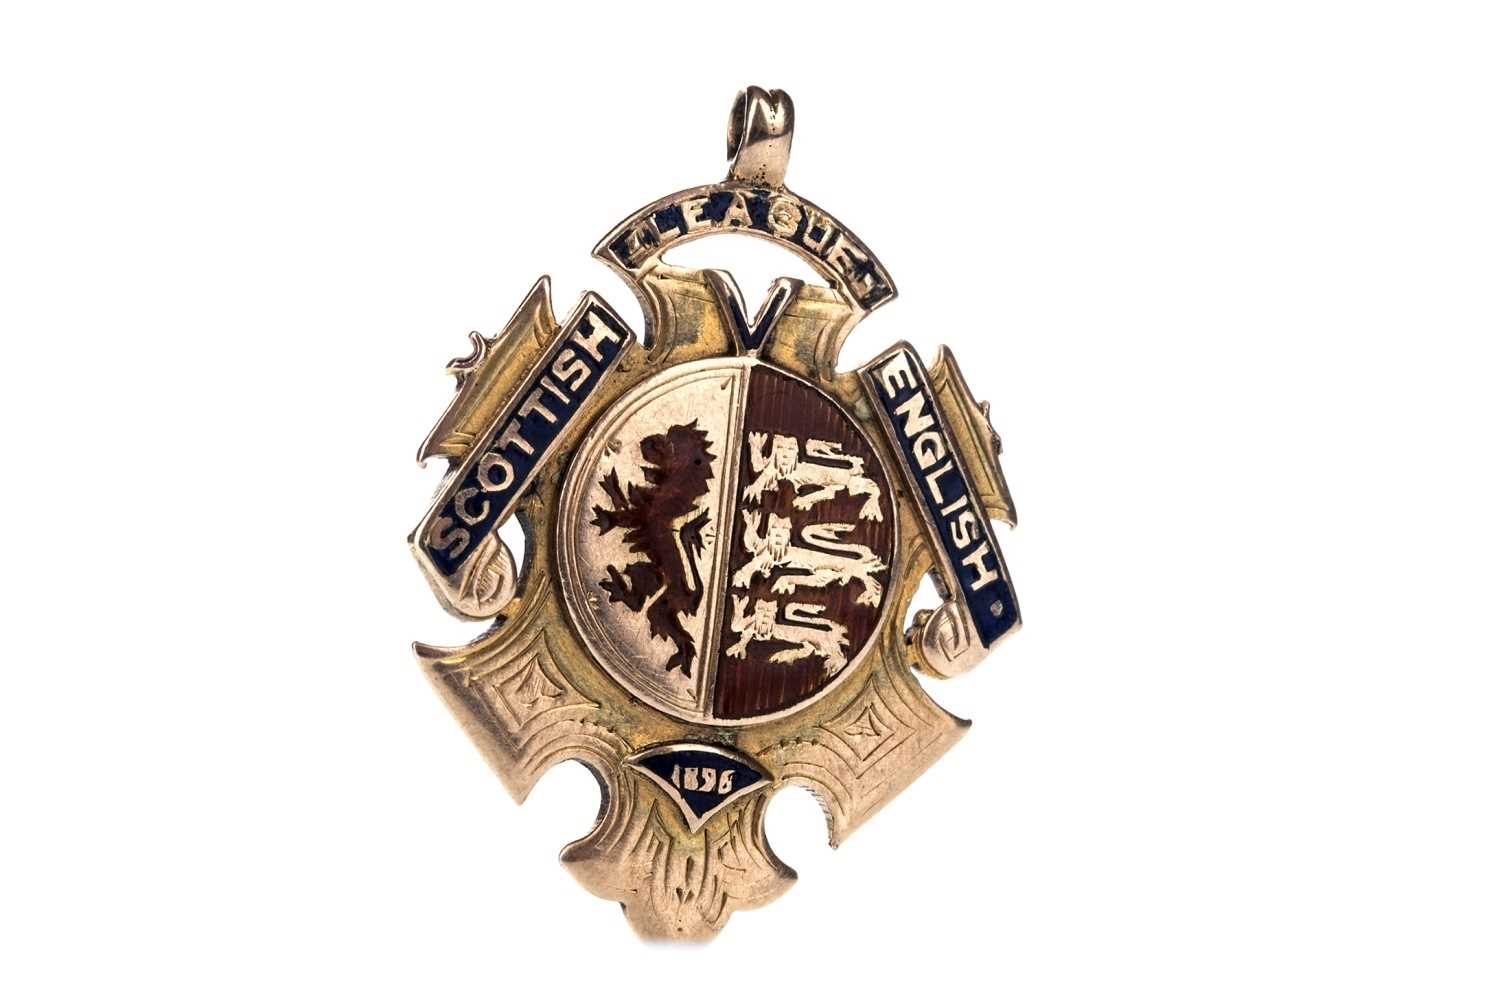 Lot 1733 - A SCOTTISH ENGLISH LEAGUE MEDAL AWARDED TO DAN DOYLE 1896